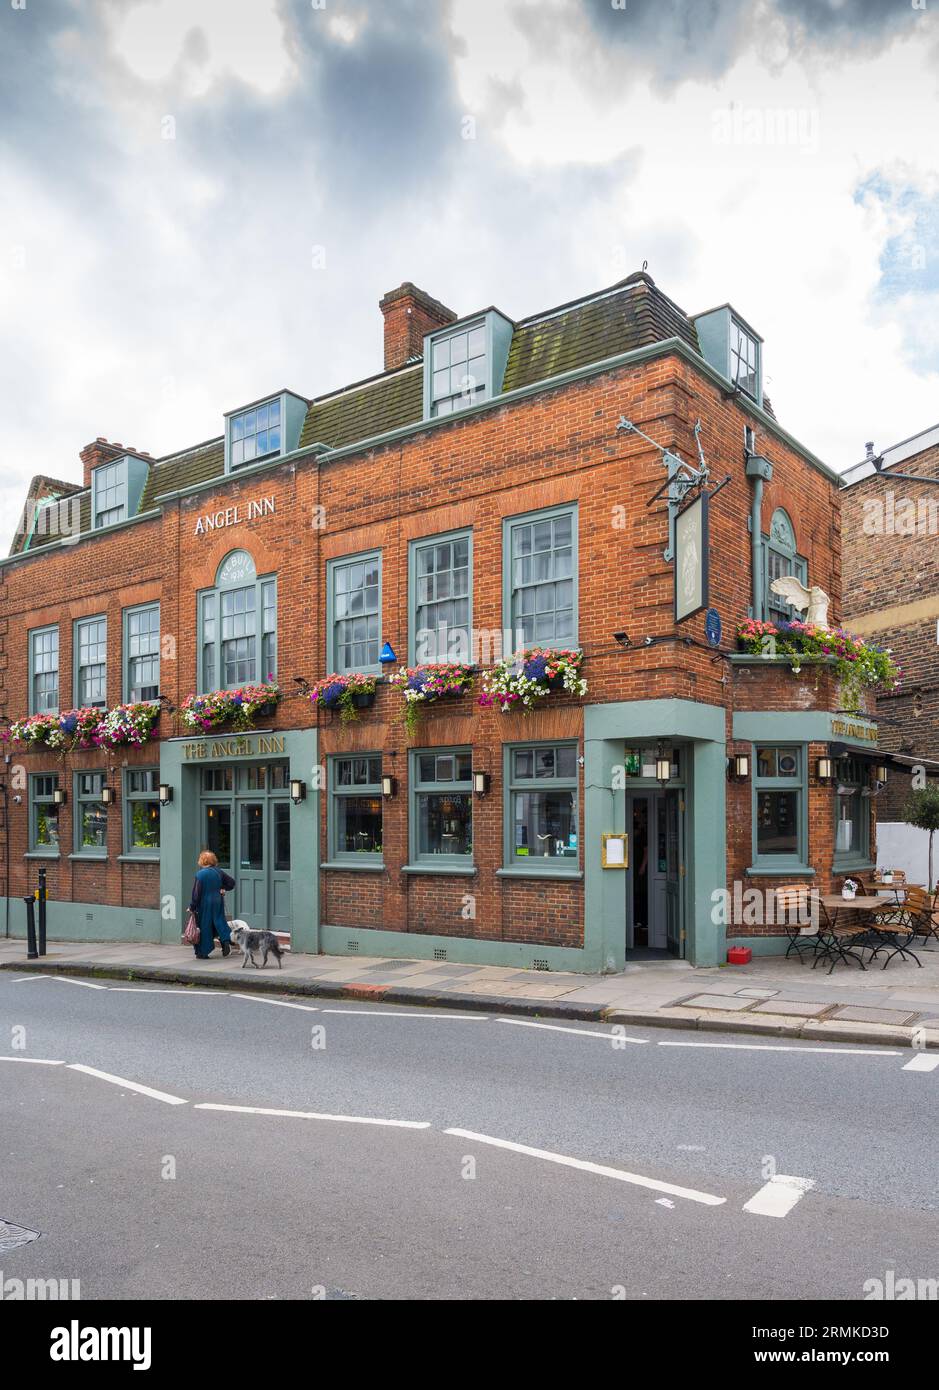 The Angel Inn pub and restaurant on Highgate High Street, Highgate Village, London, England, UK Stock Photo